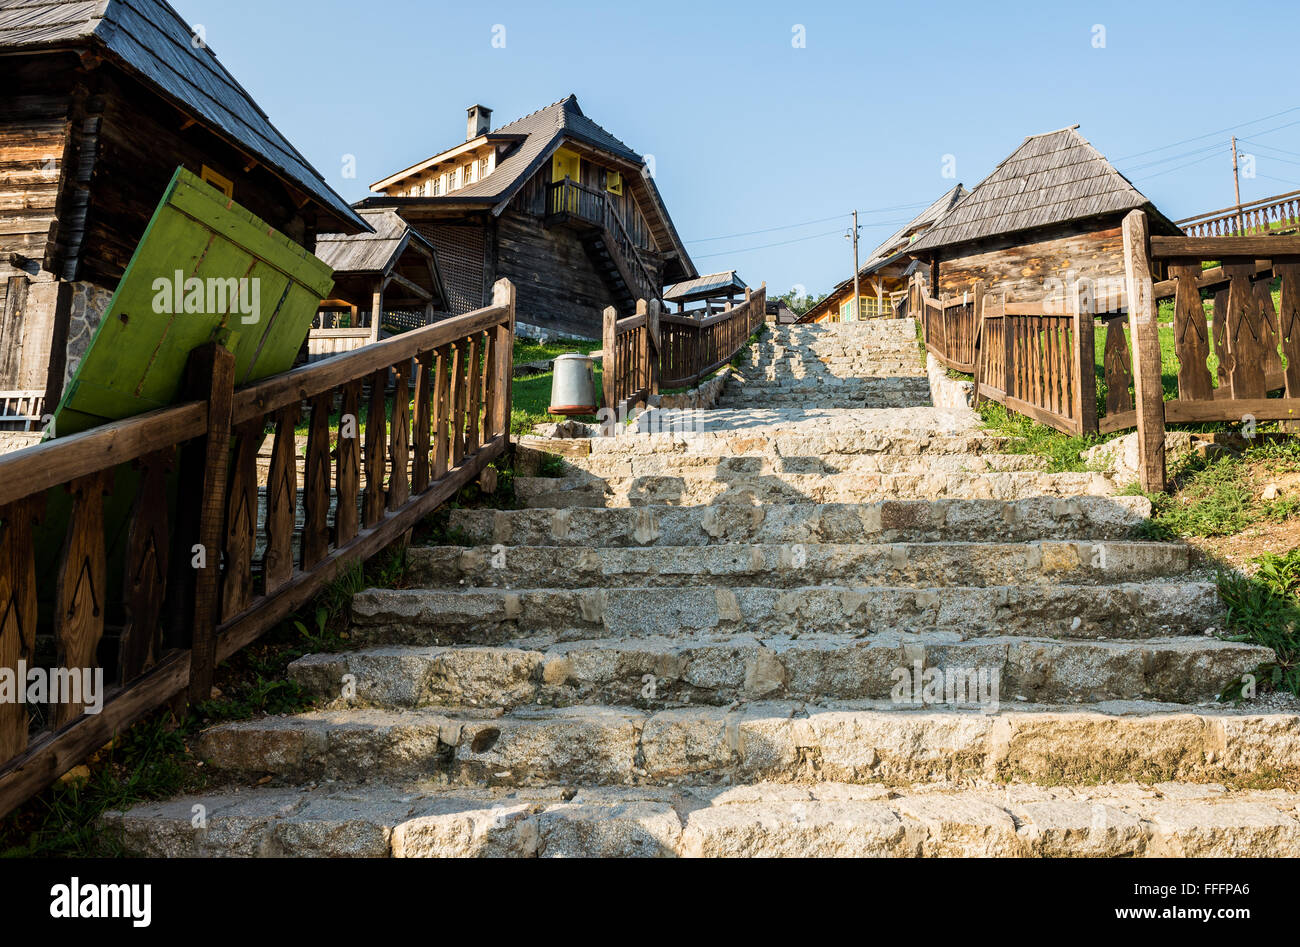 traditional Drvengrad village also called Kustendorf built by Emir Kusturica in Zlatibor District, Serbia Stock Photo